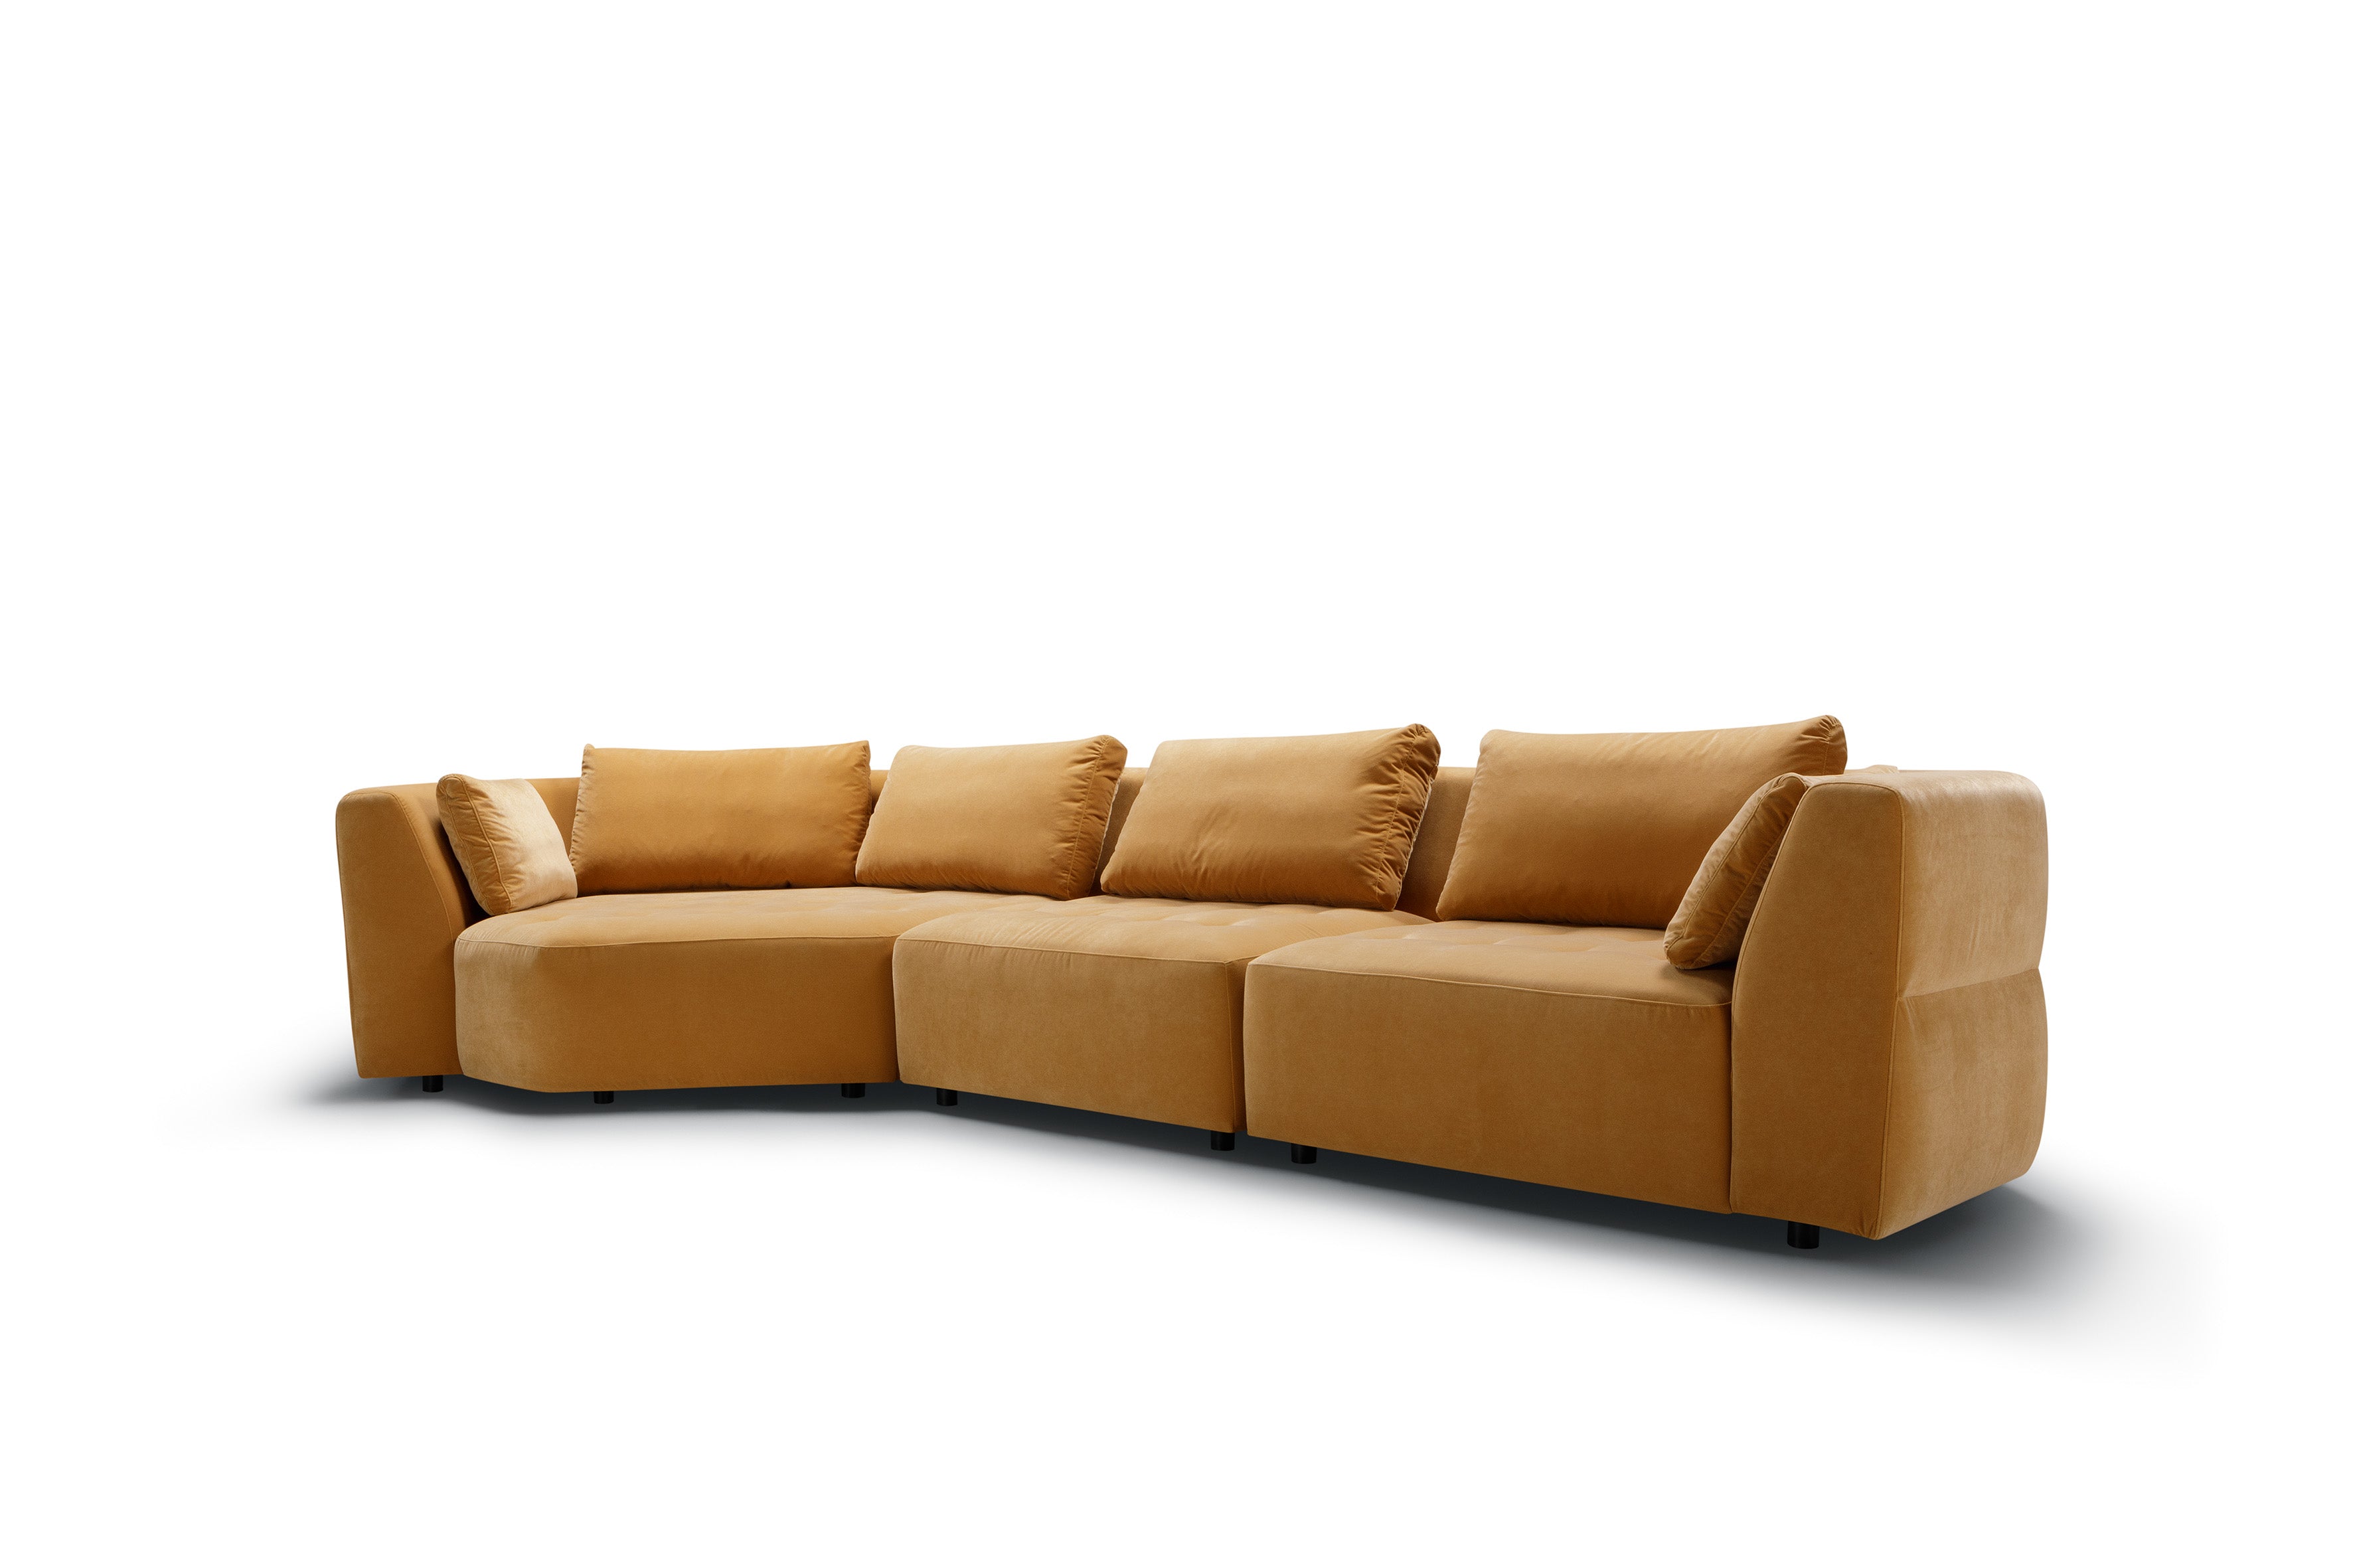 Mastrella Codi Set 2 Corner Sofa Left